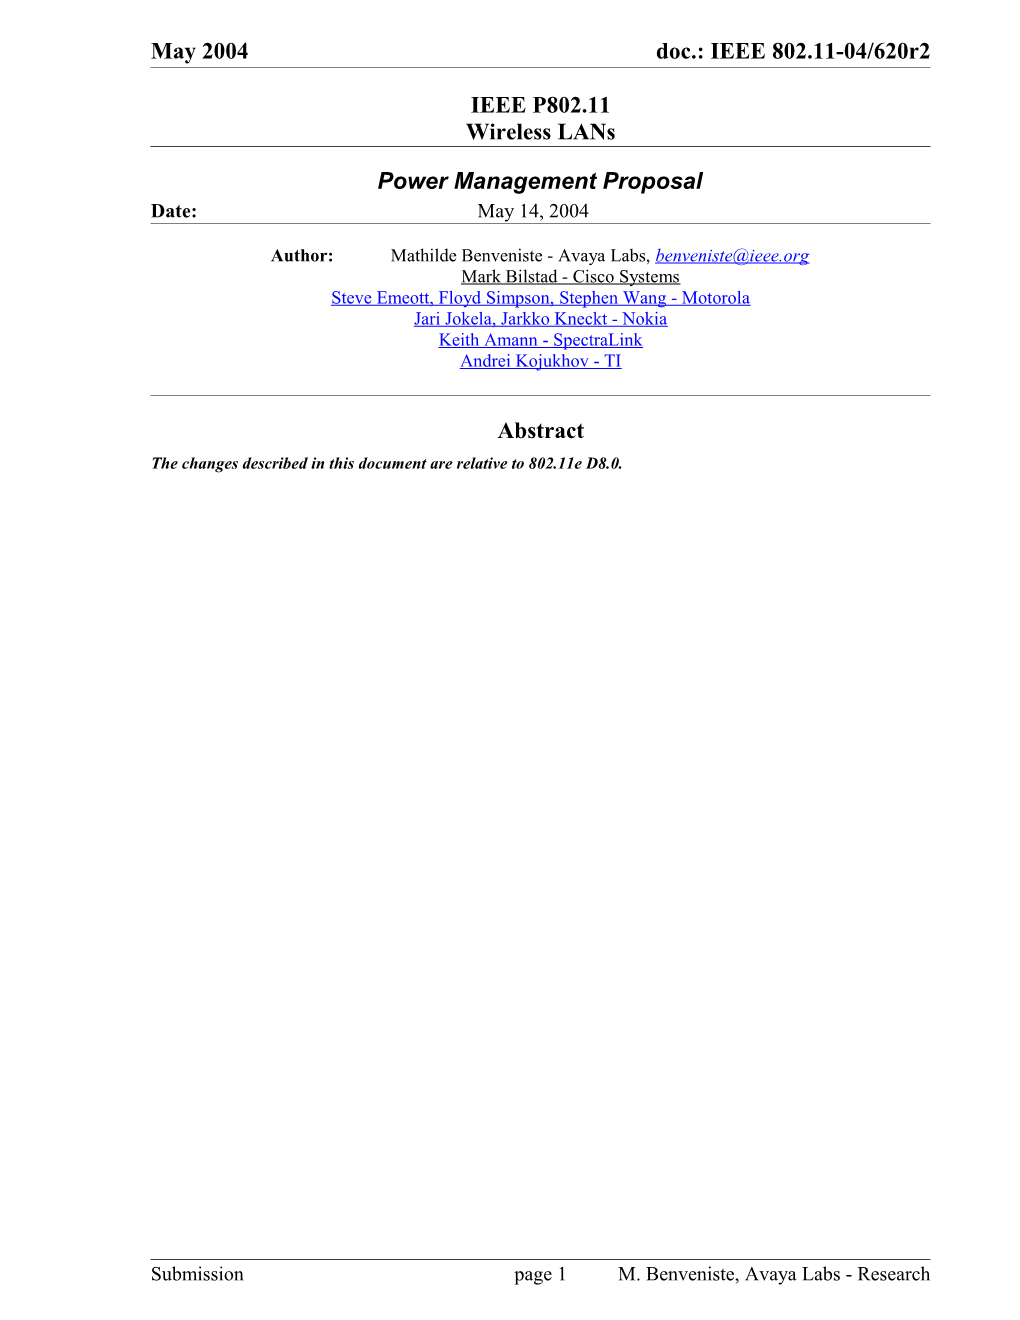 Power Management Proposal